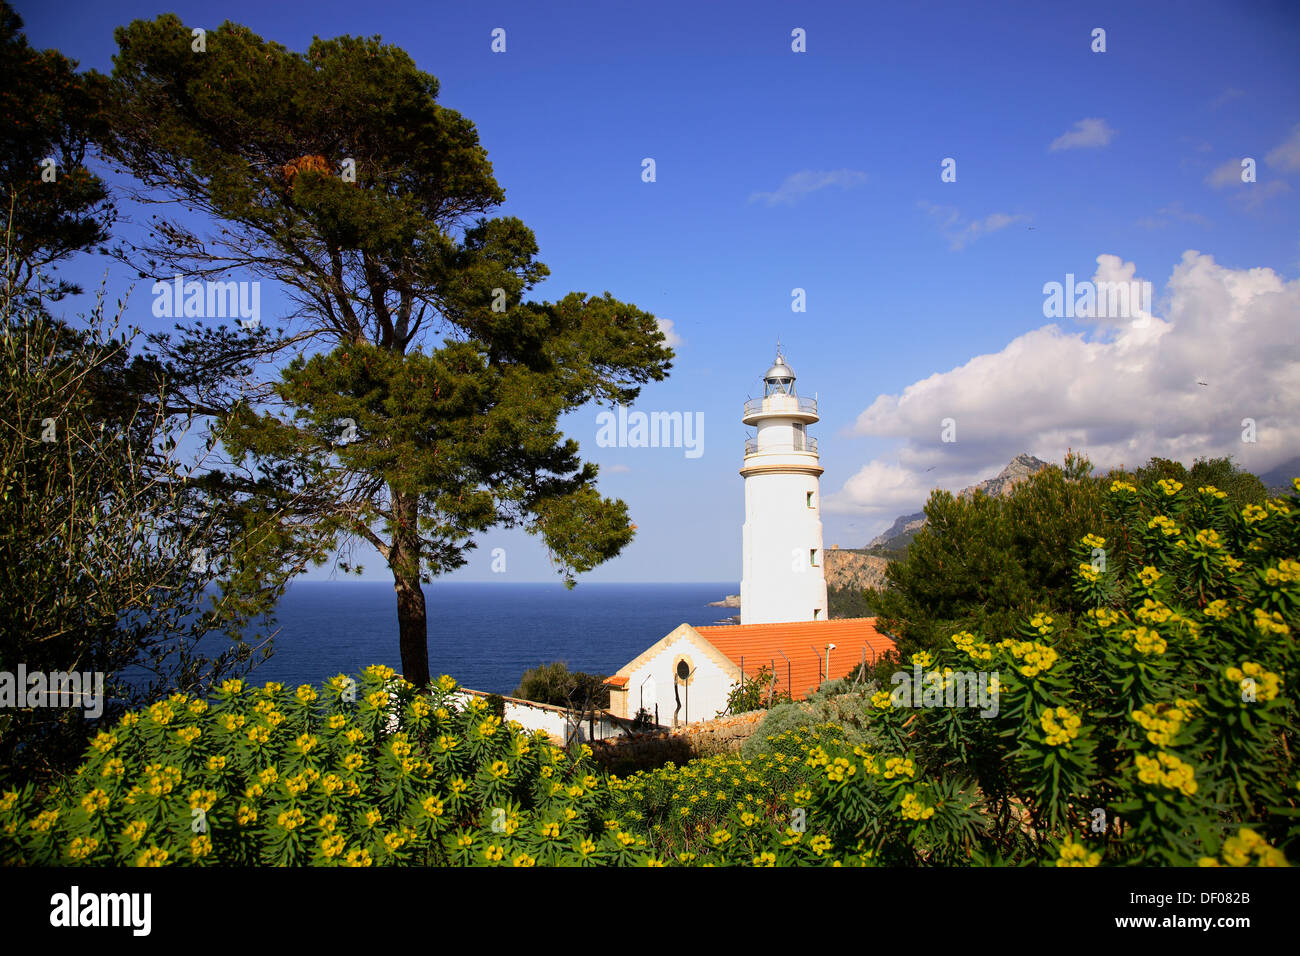 Lighthouse at Cap Gros obove Port Soller,  Mallorca, Balearic Islands, Spain Stock Photo